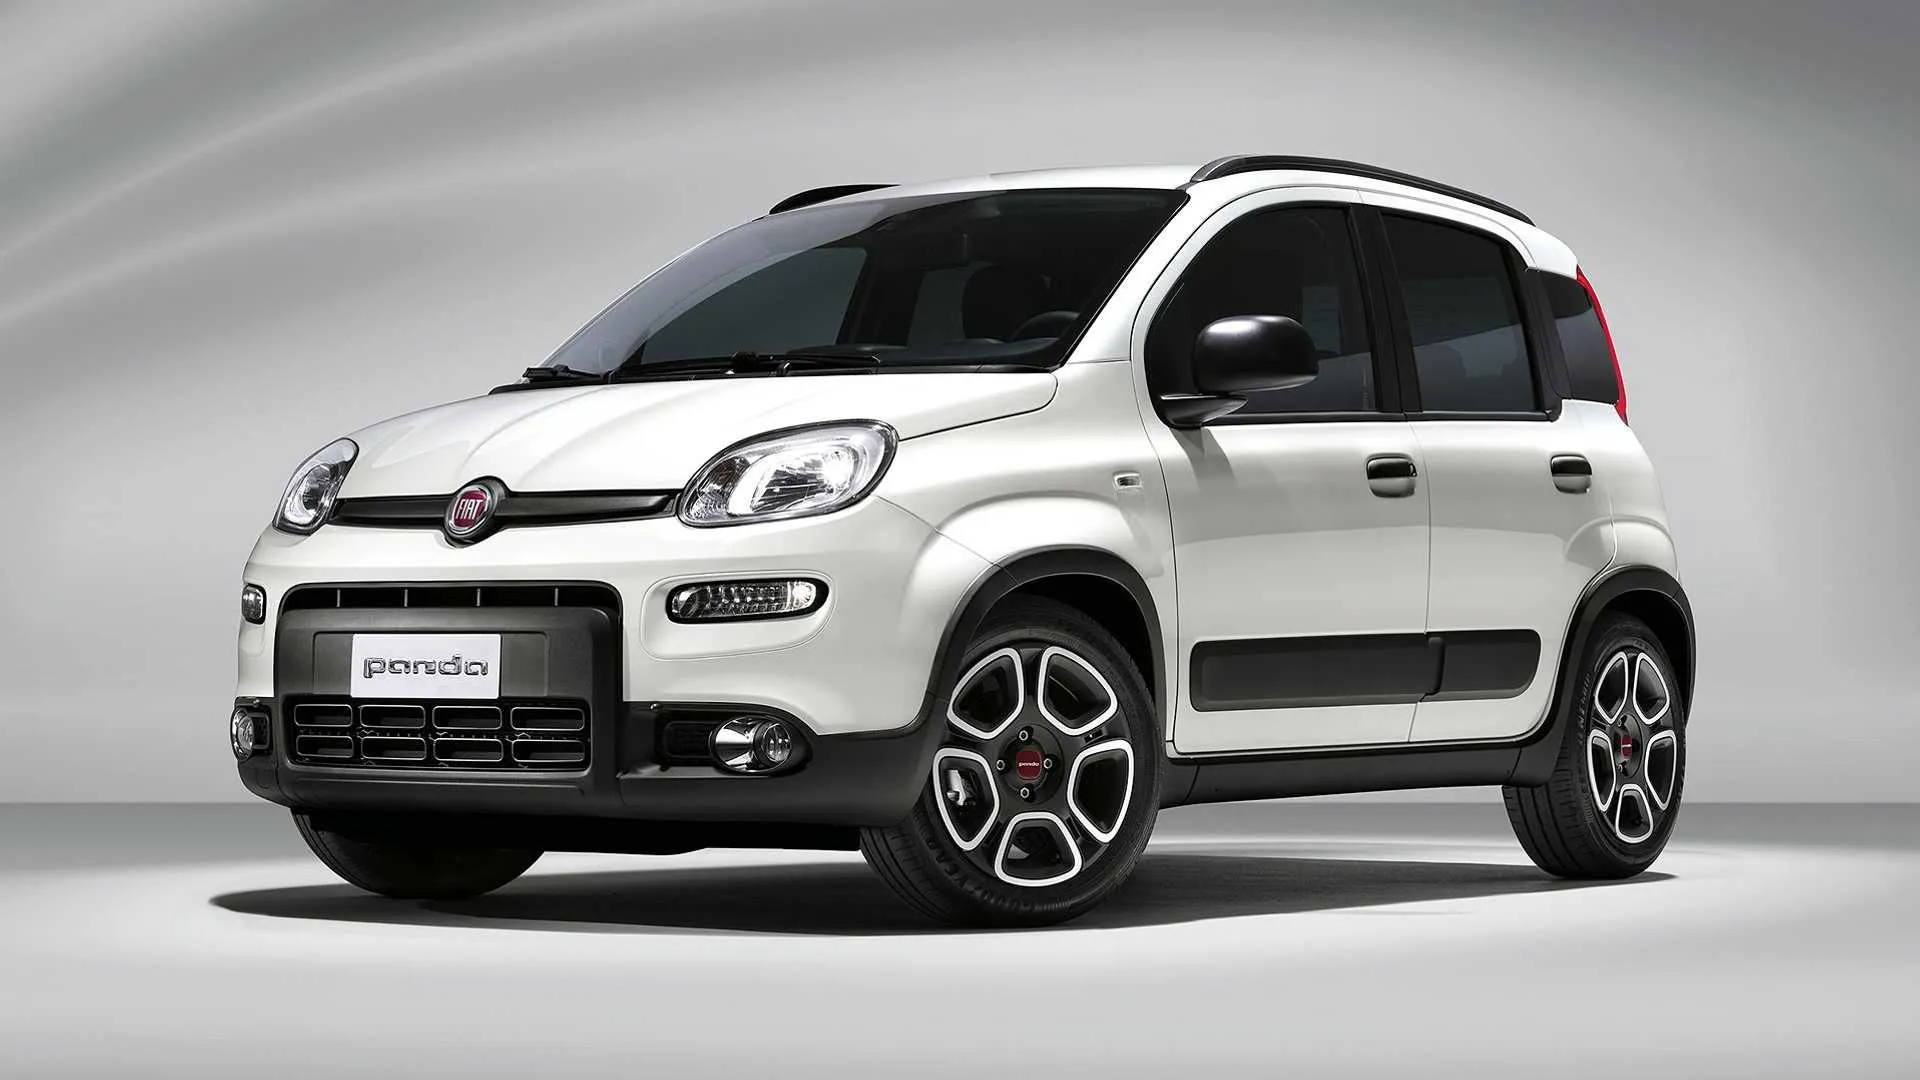 Fiat vai lançar carro elétrico popular baseado no Panda